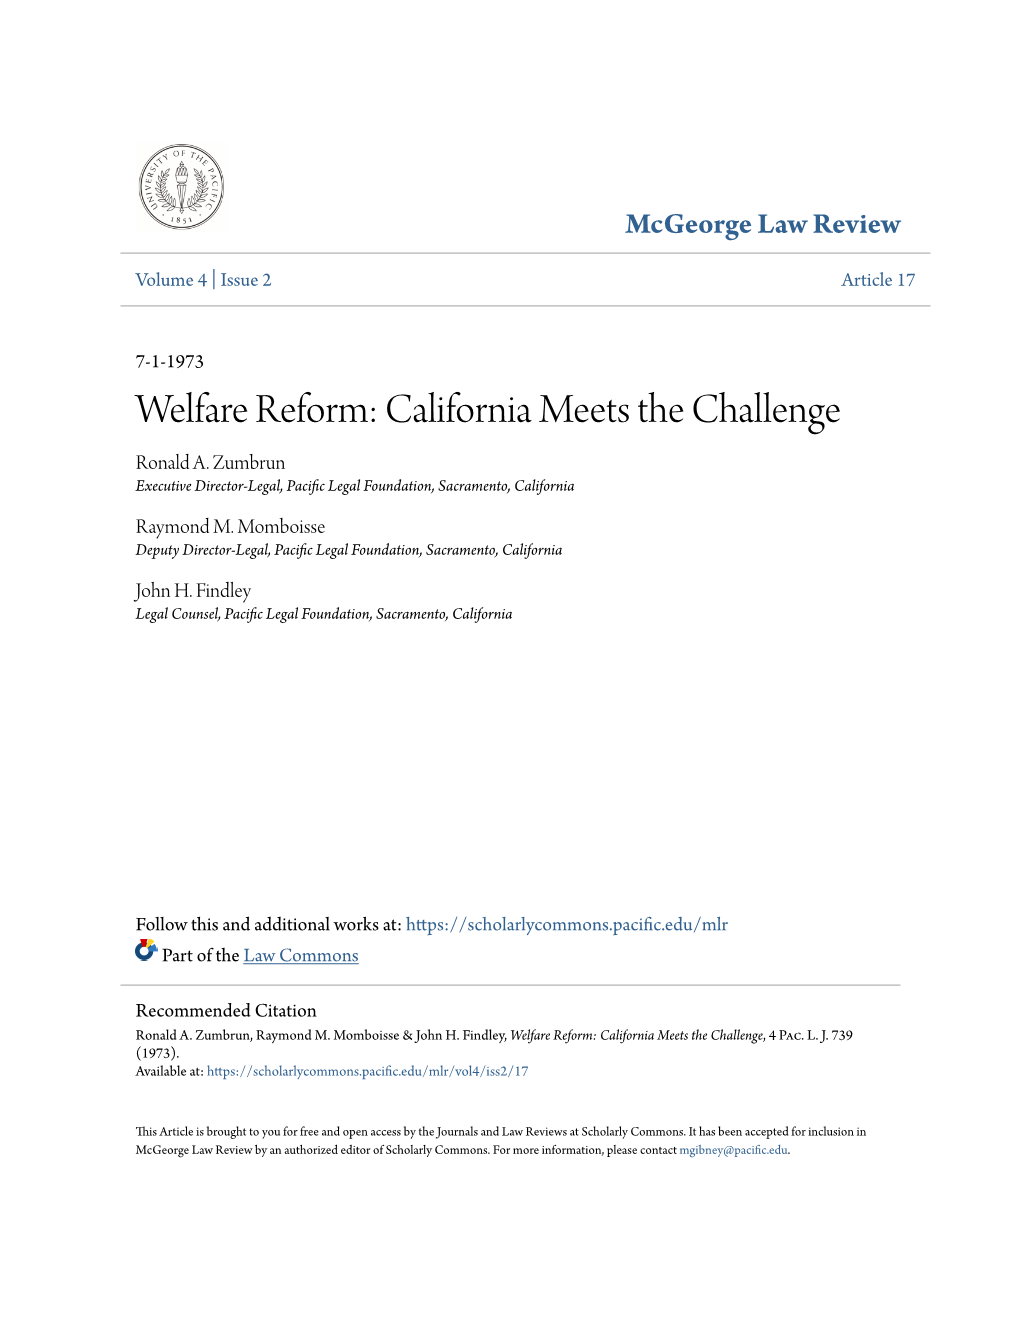 Welfare Reform: California Meets the Challenge Ronald A